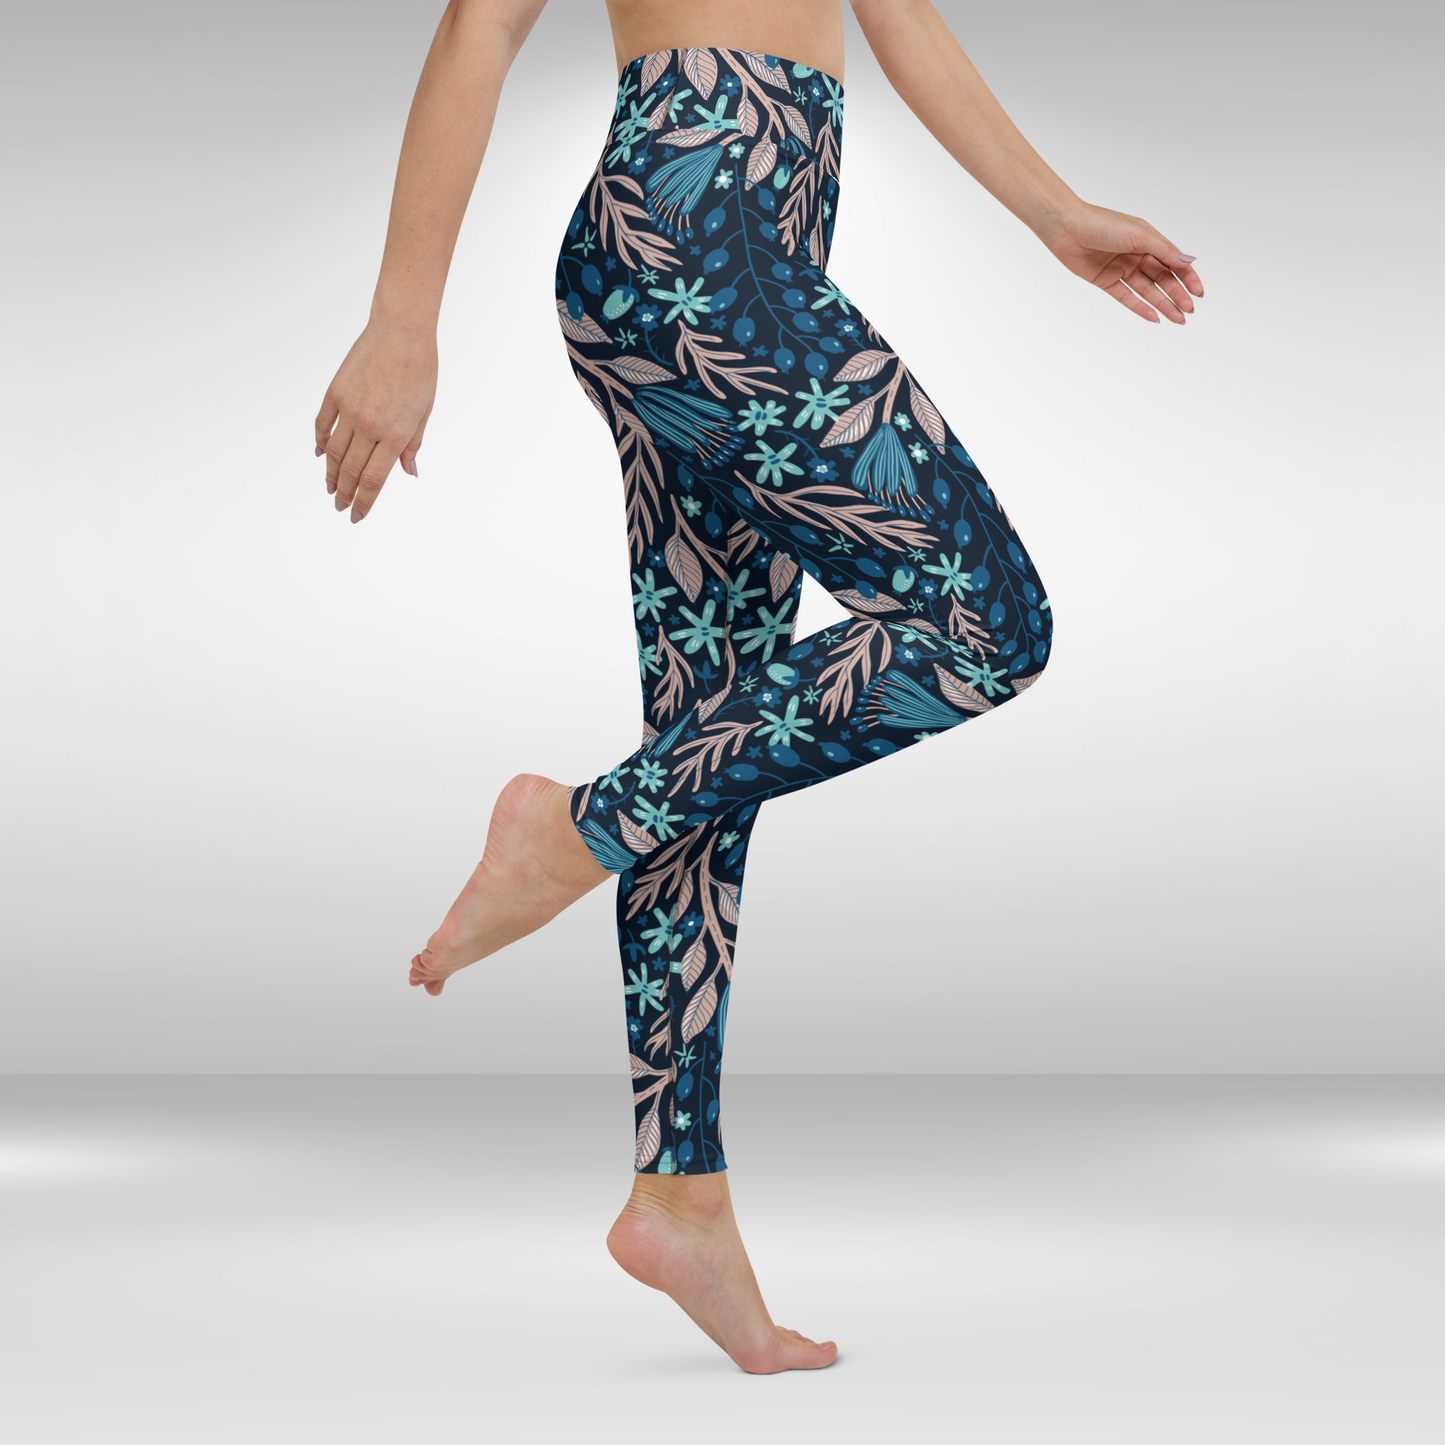 Women Yoga Leggings - Blue Night Tropical Print